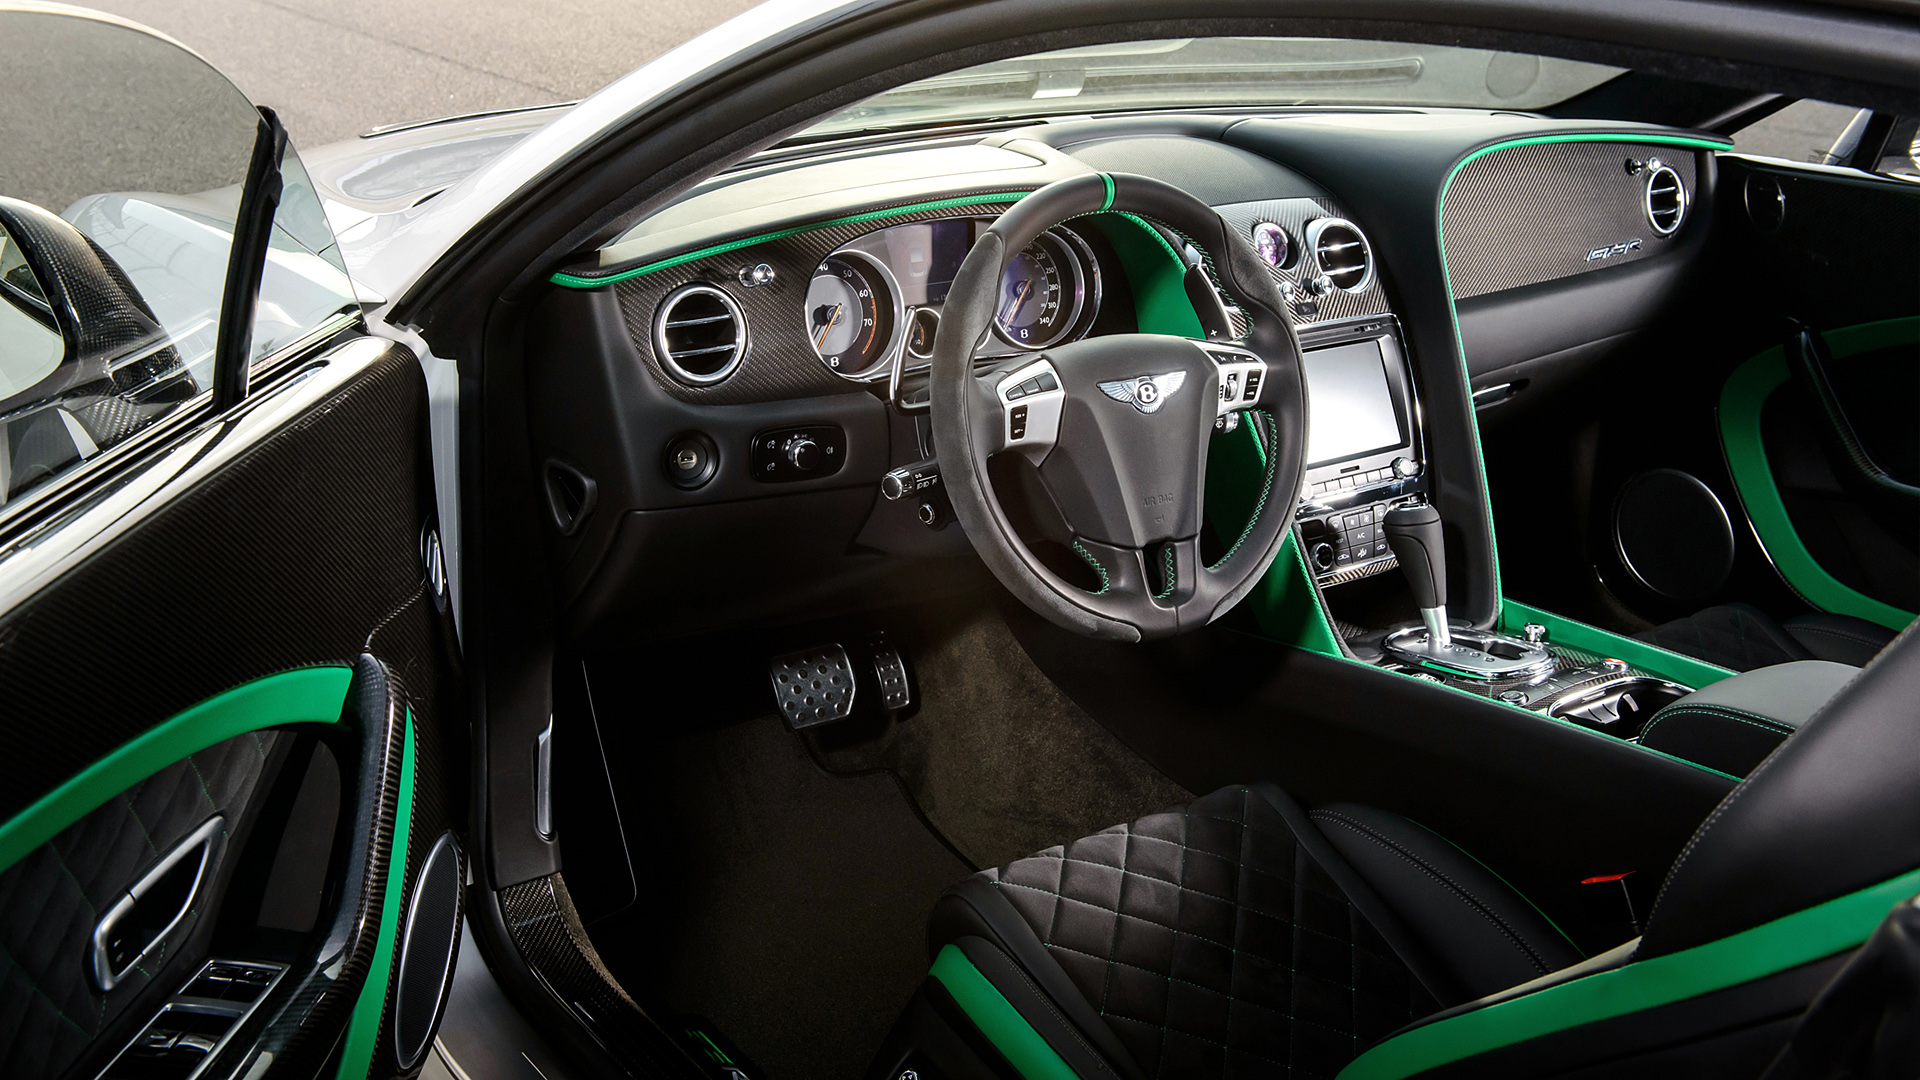  2015 Bentley Continental GT3-R Wallpaper.